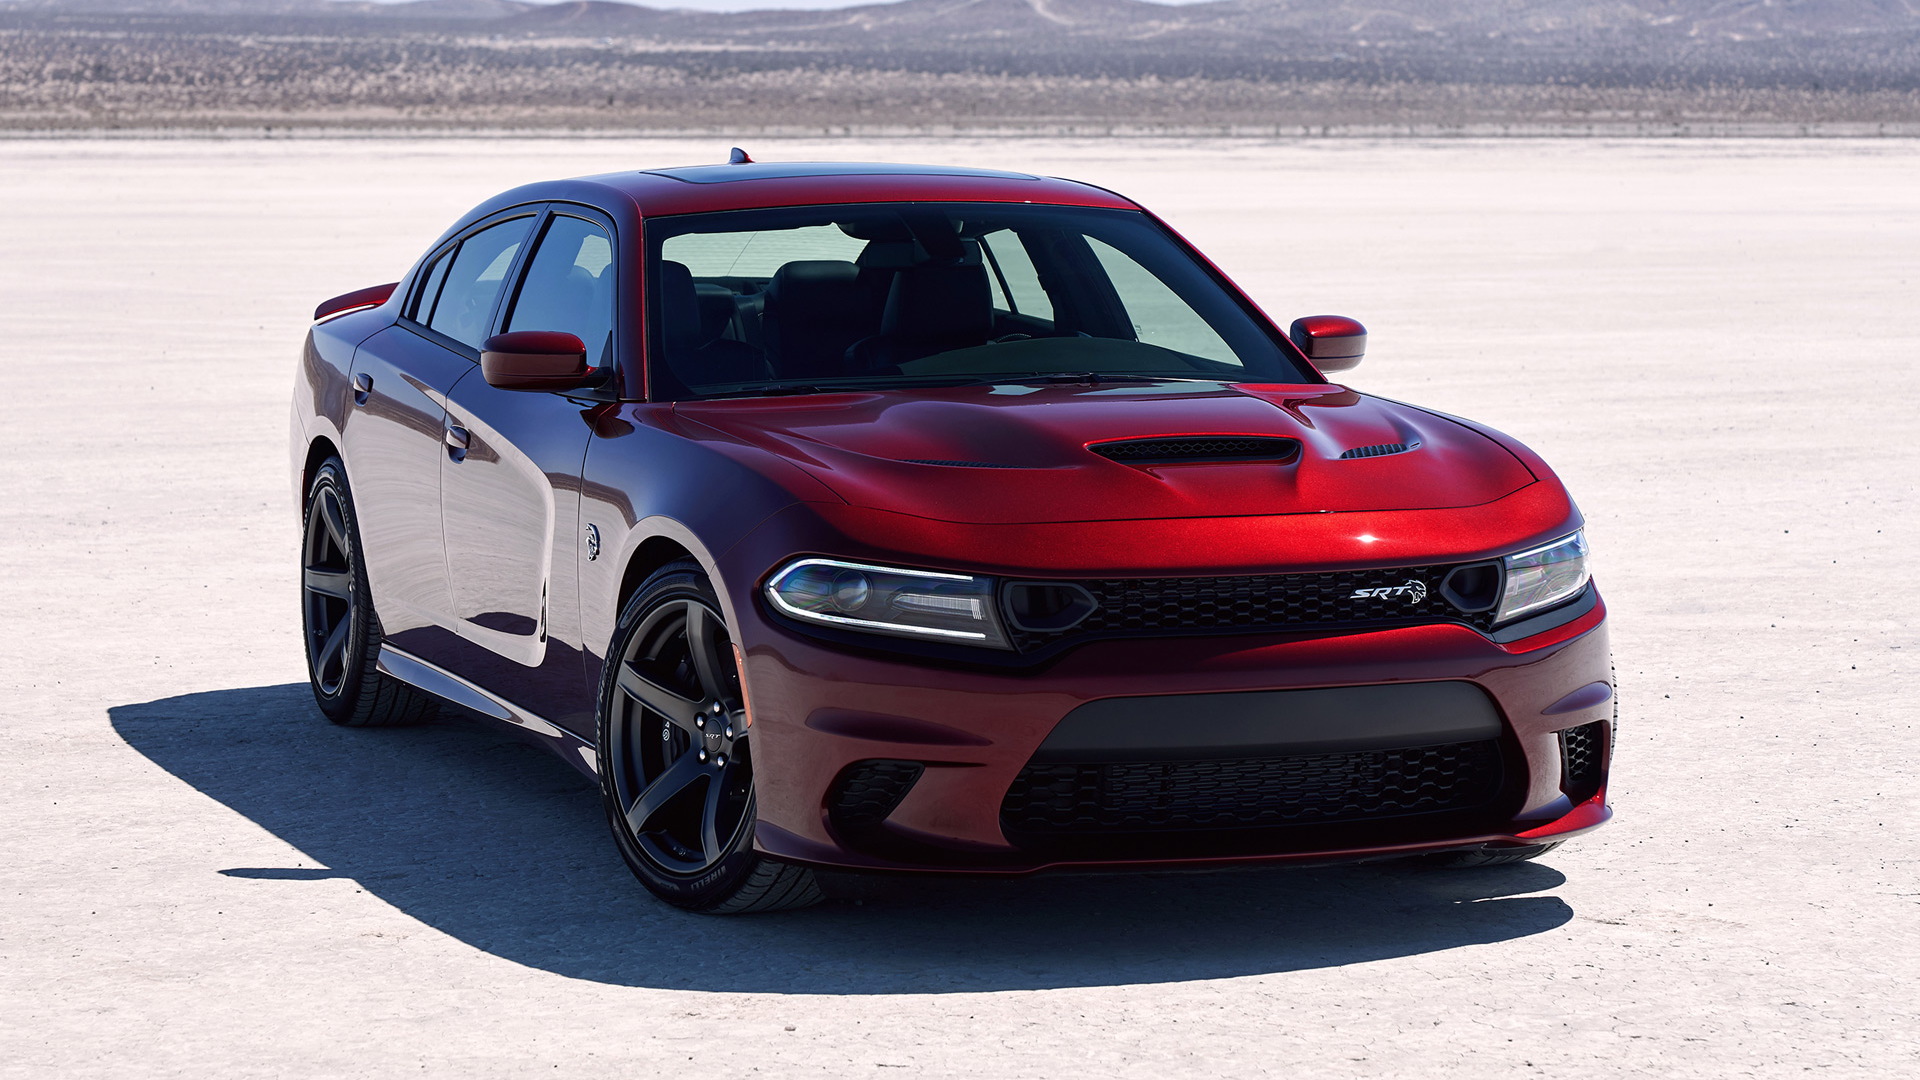 2019 Dodge Charger SRT Hellcat gets revised look, Demon tech